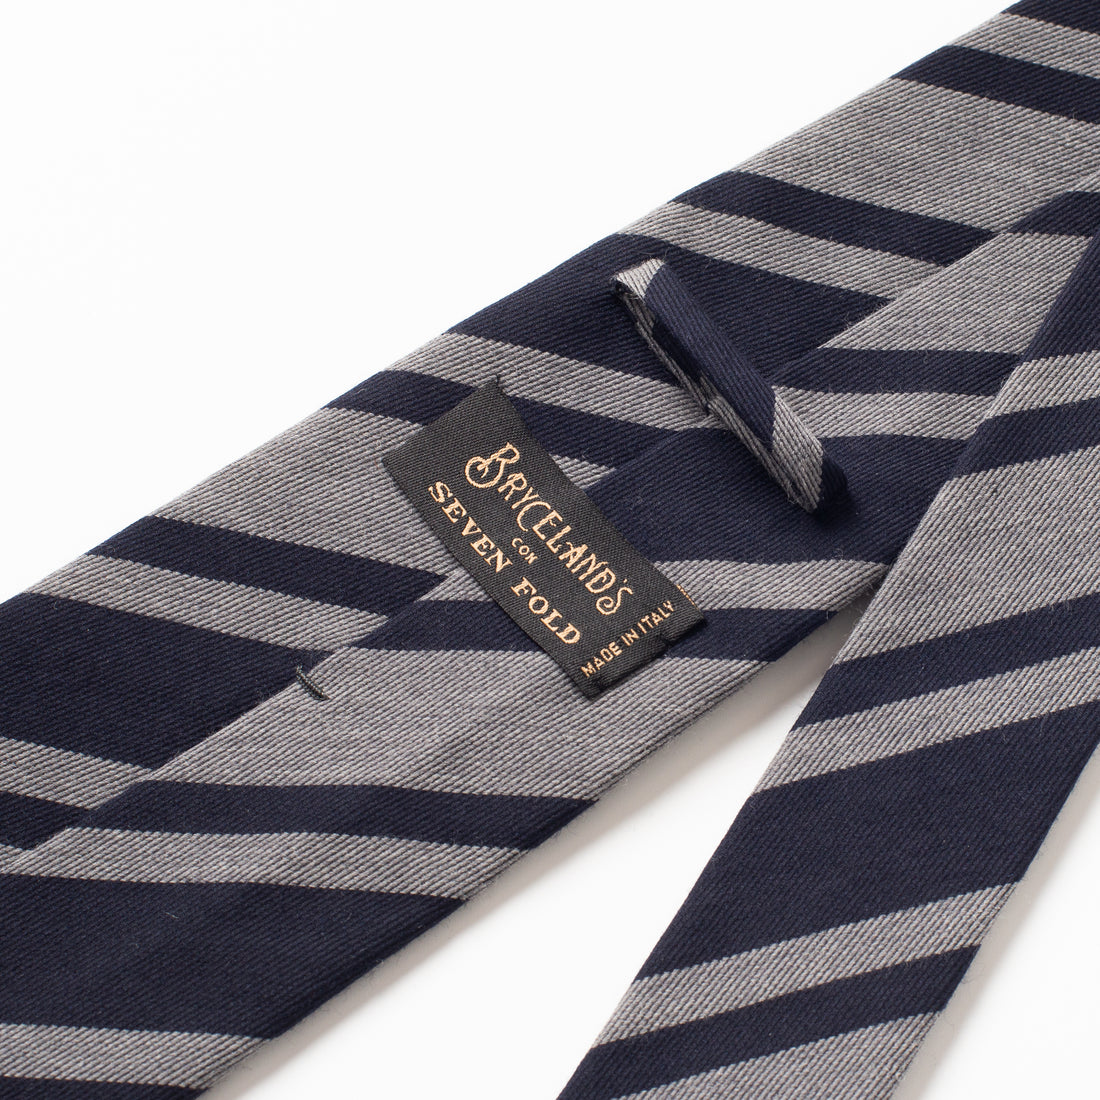 Bryceland’s Wool Tie Navy/Grey Stripe